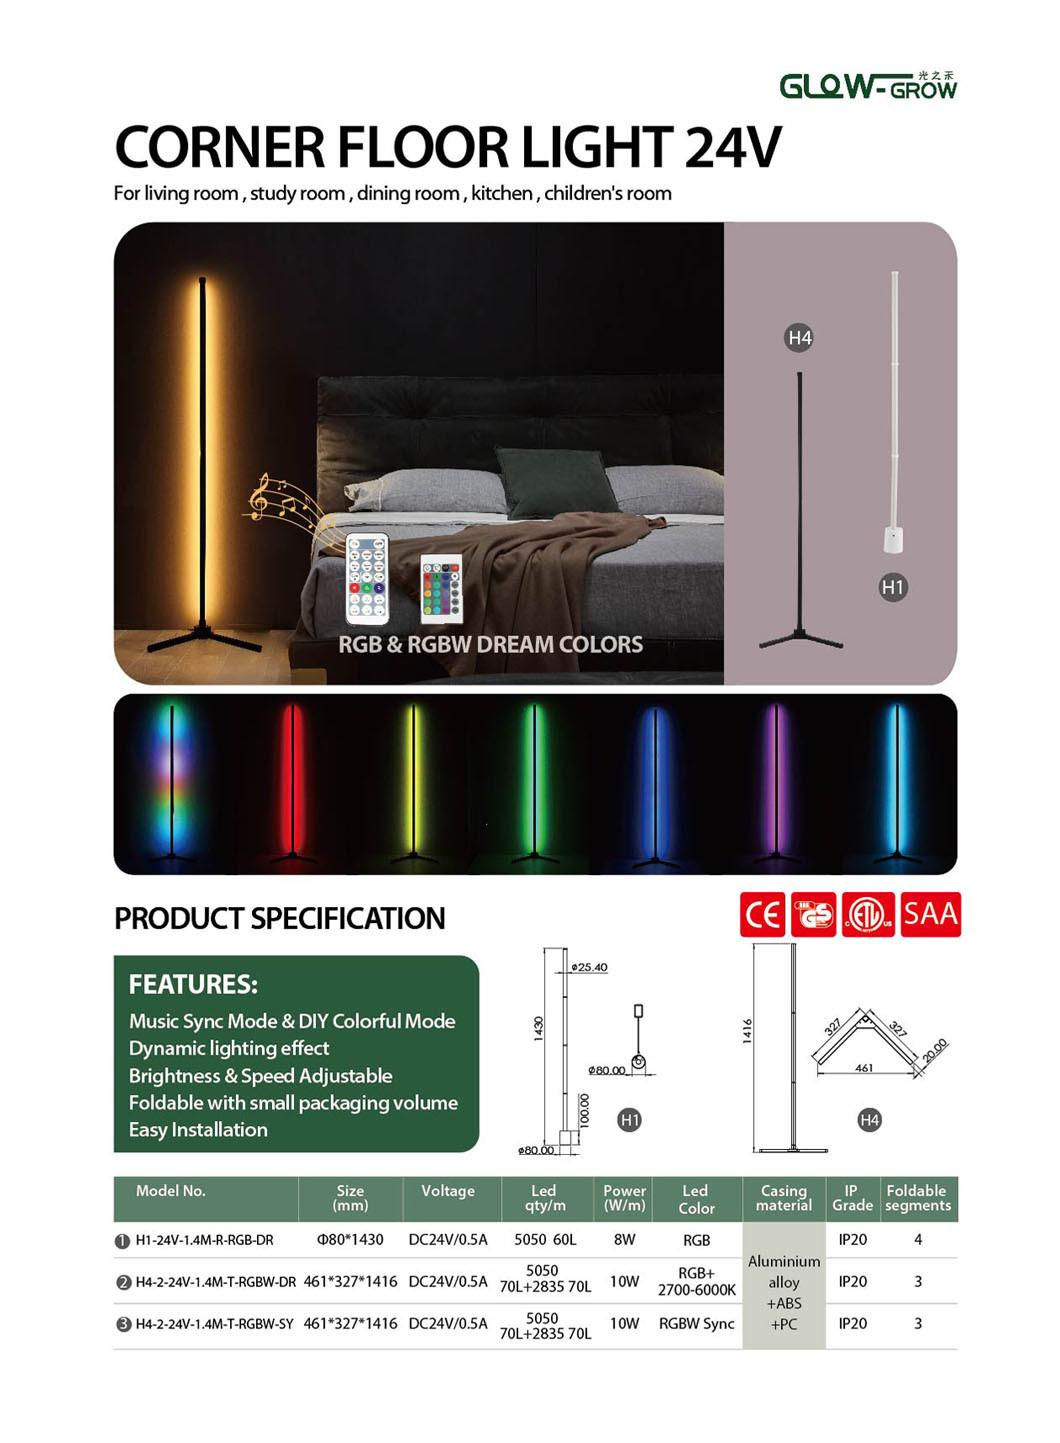 Ambiance Light RGBW Sync Multicolor Change LED Atmosphere Corner Floor Light for Illumination House Home Decoration